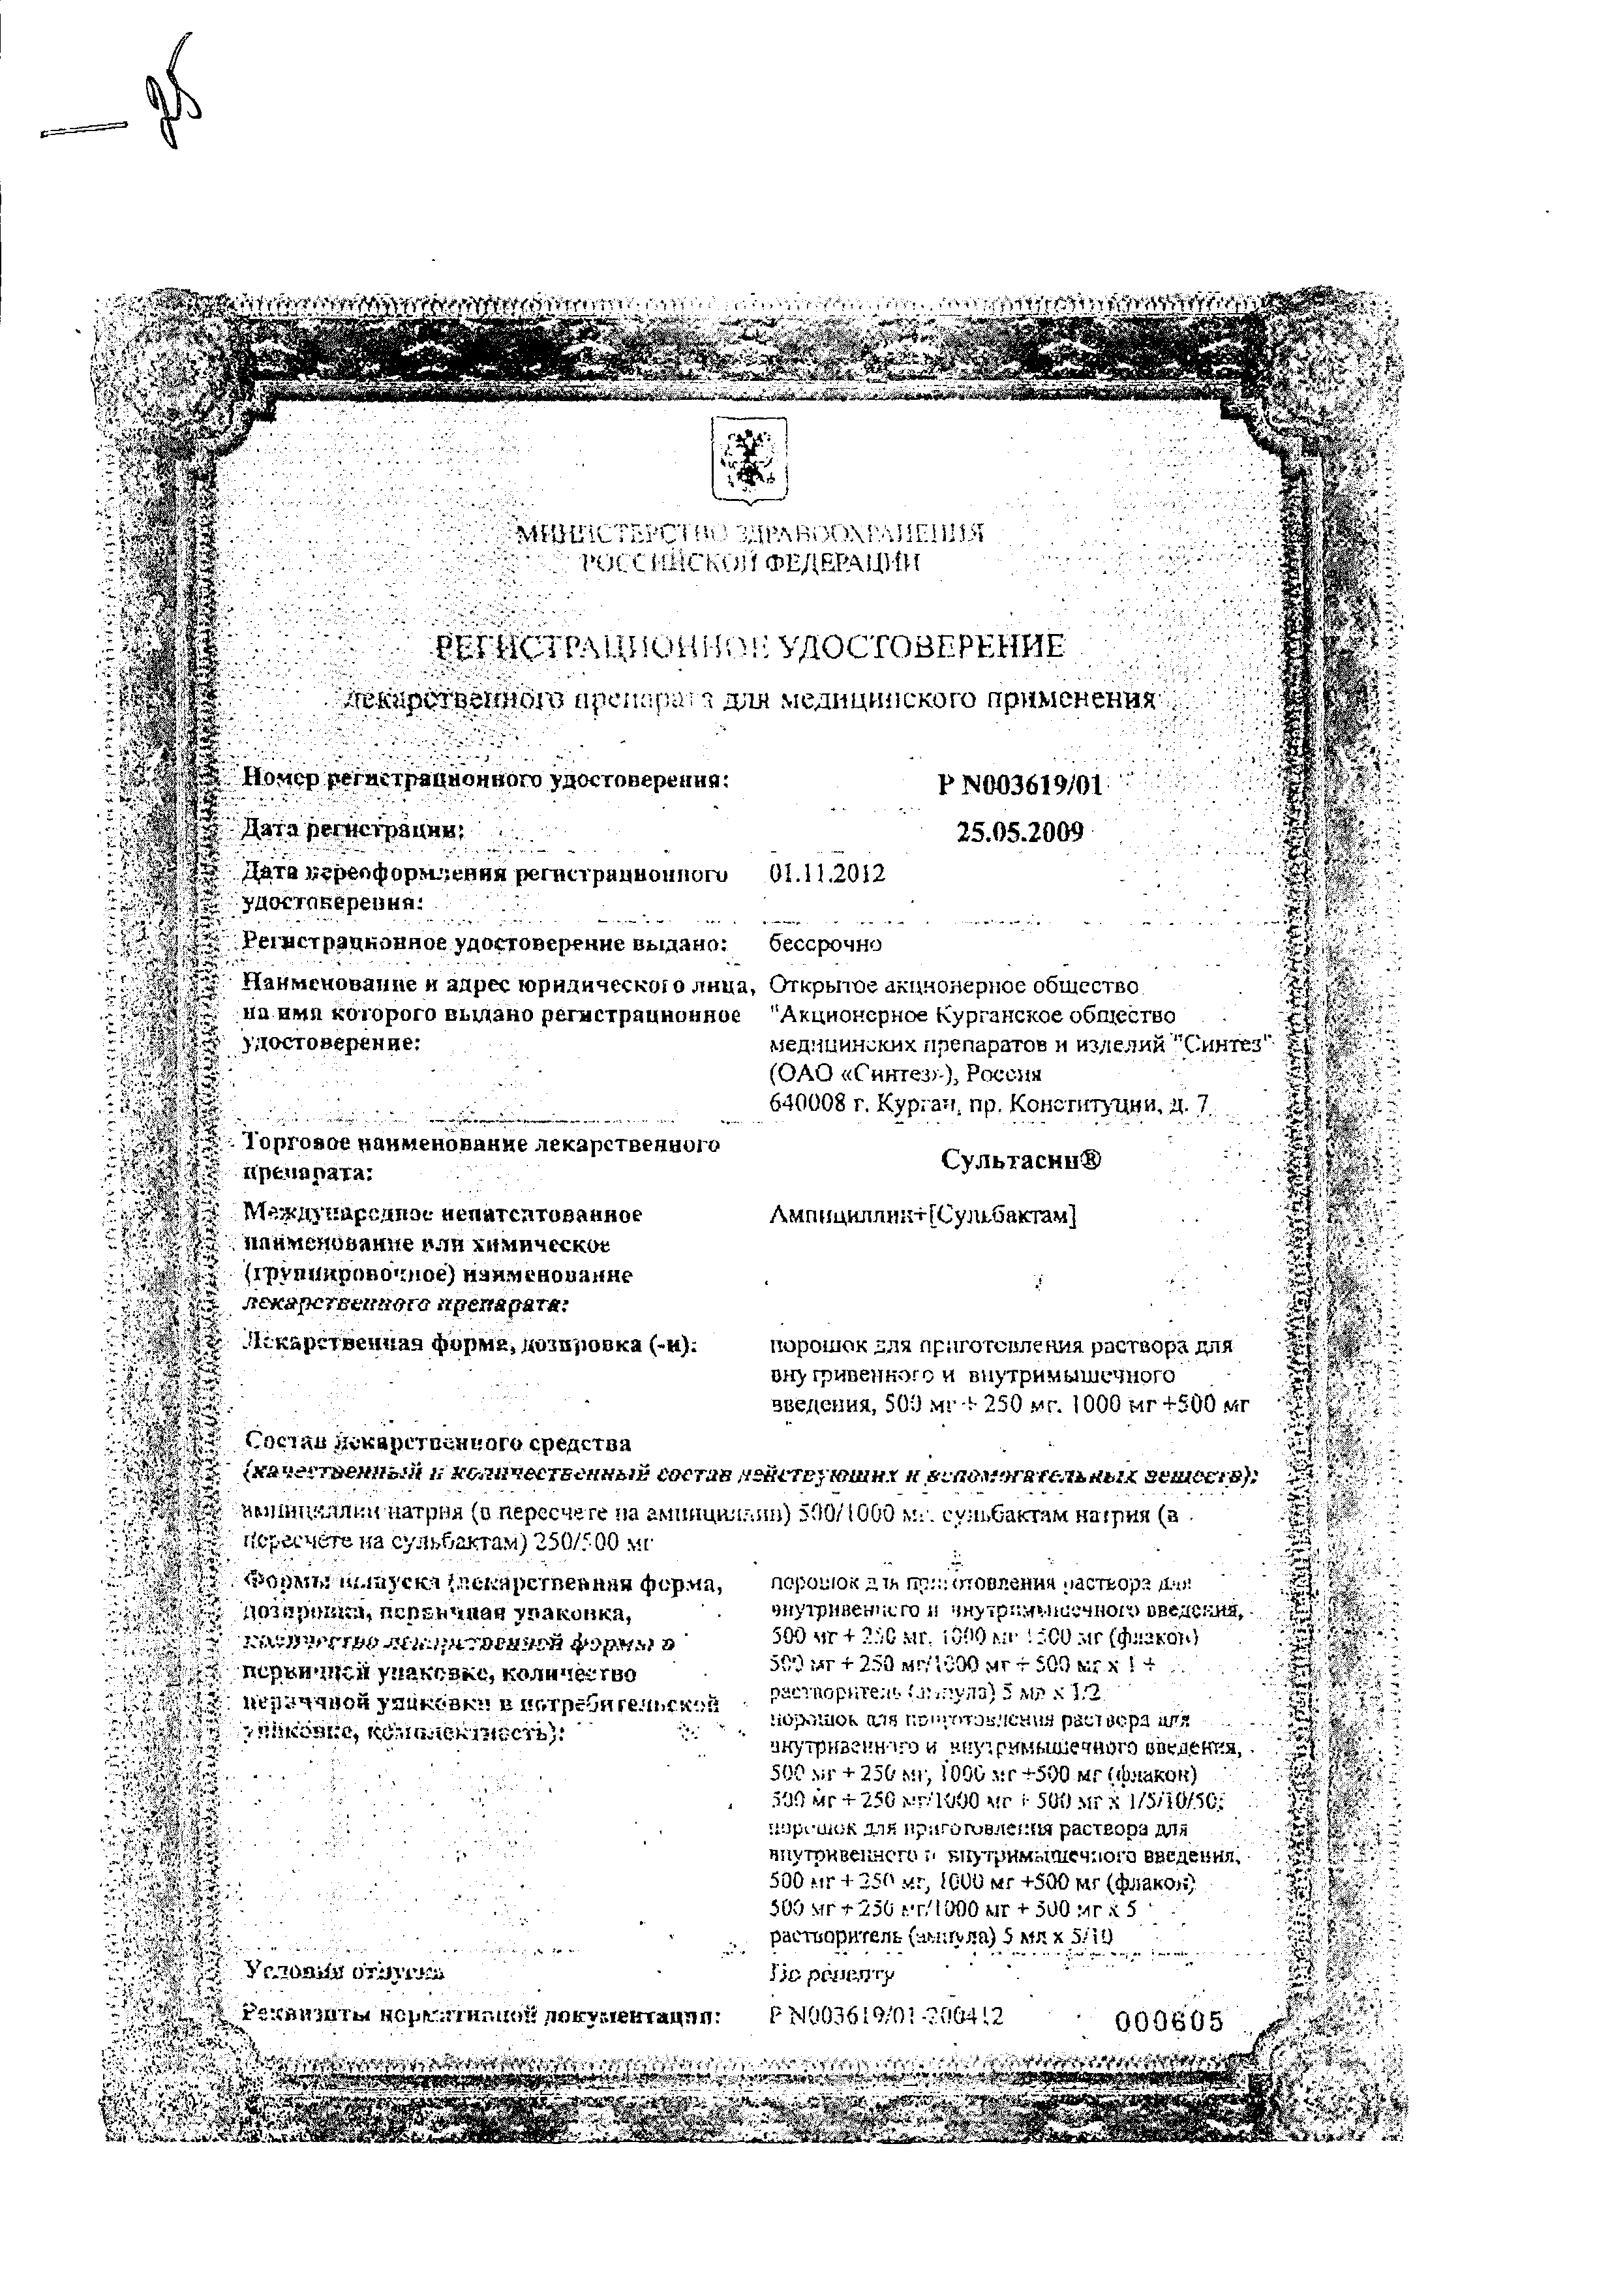 Сультасин сертификат